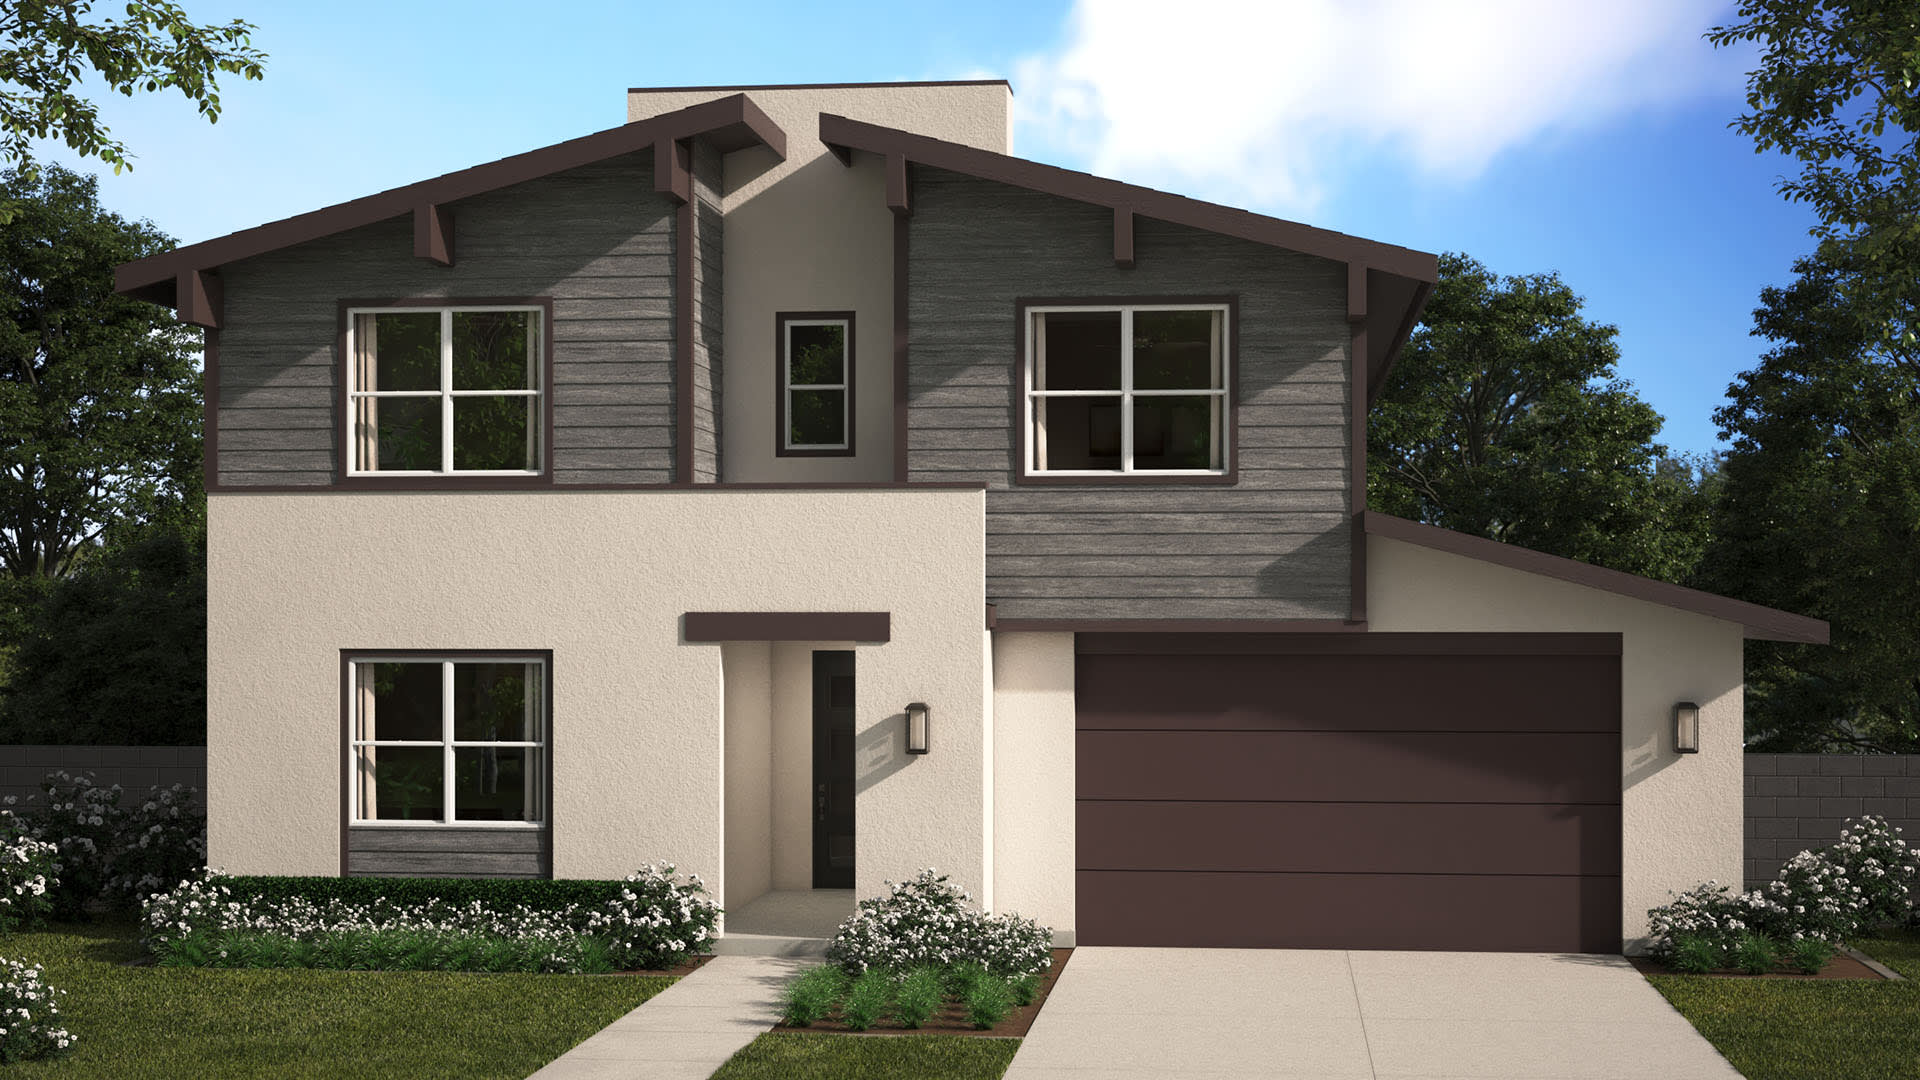 Elevation A | Plan One | Wildstar | Narra Hills | New Homes in North Fontana, CA | Landsea Homes